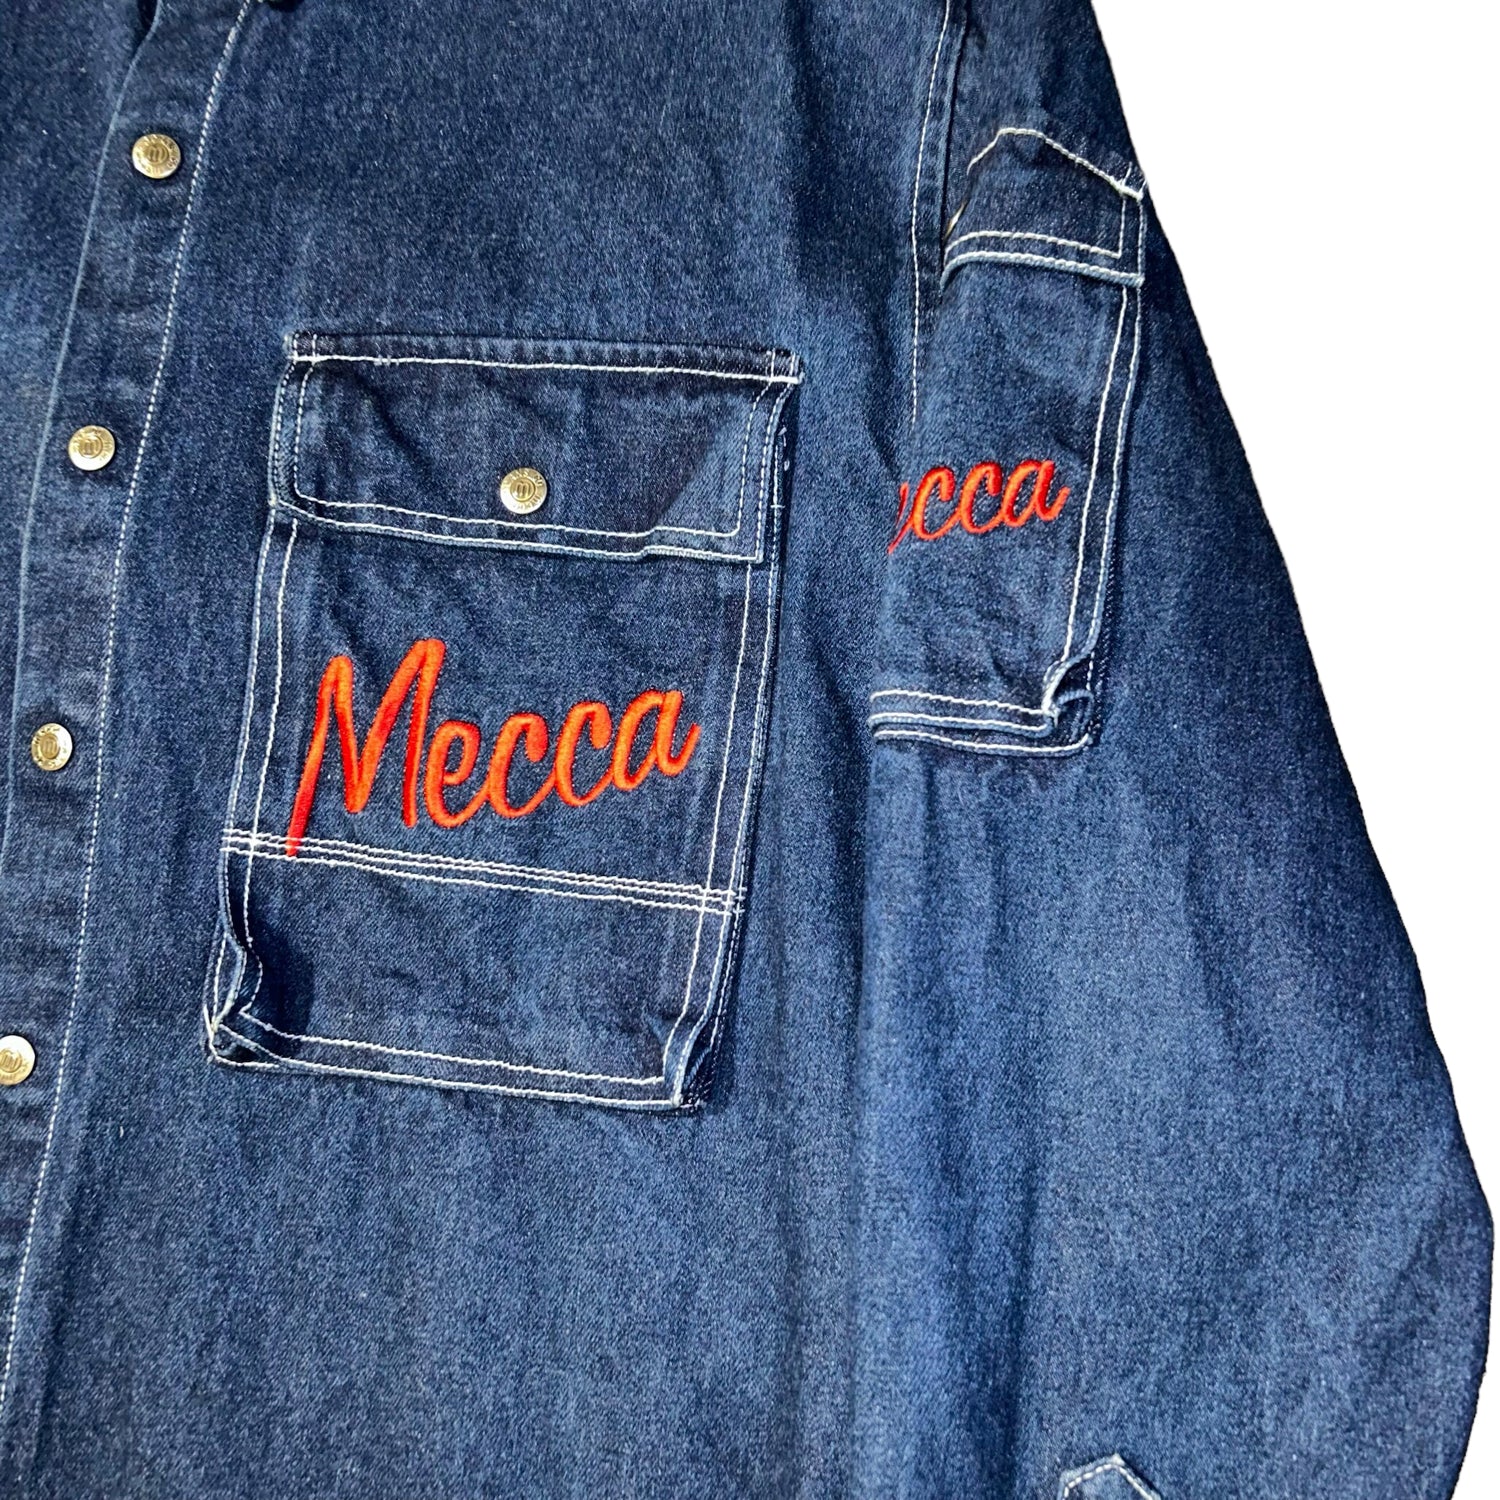 Mecca Vintage Denim Jacket (XXL)